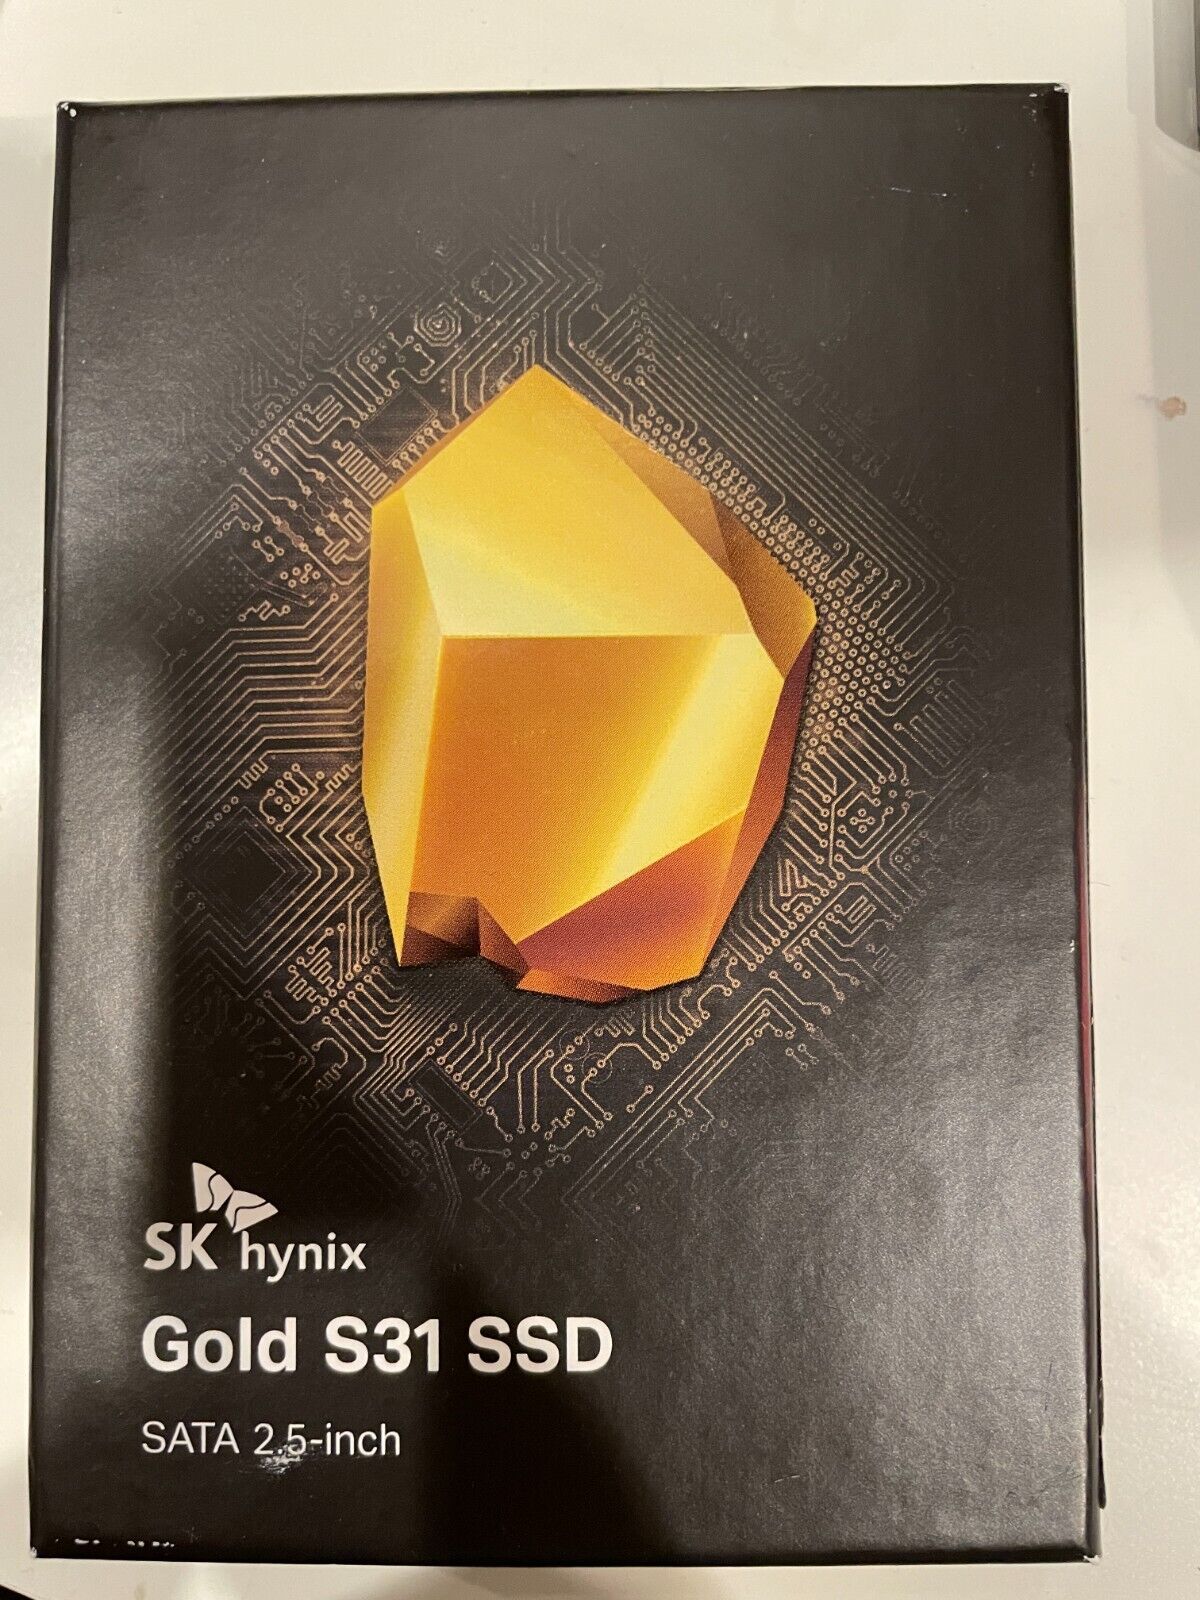 SK hynix Gold P31 SSD 500GB - SATA 2.5-inch / New in Sealed Box